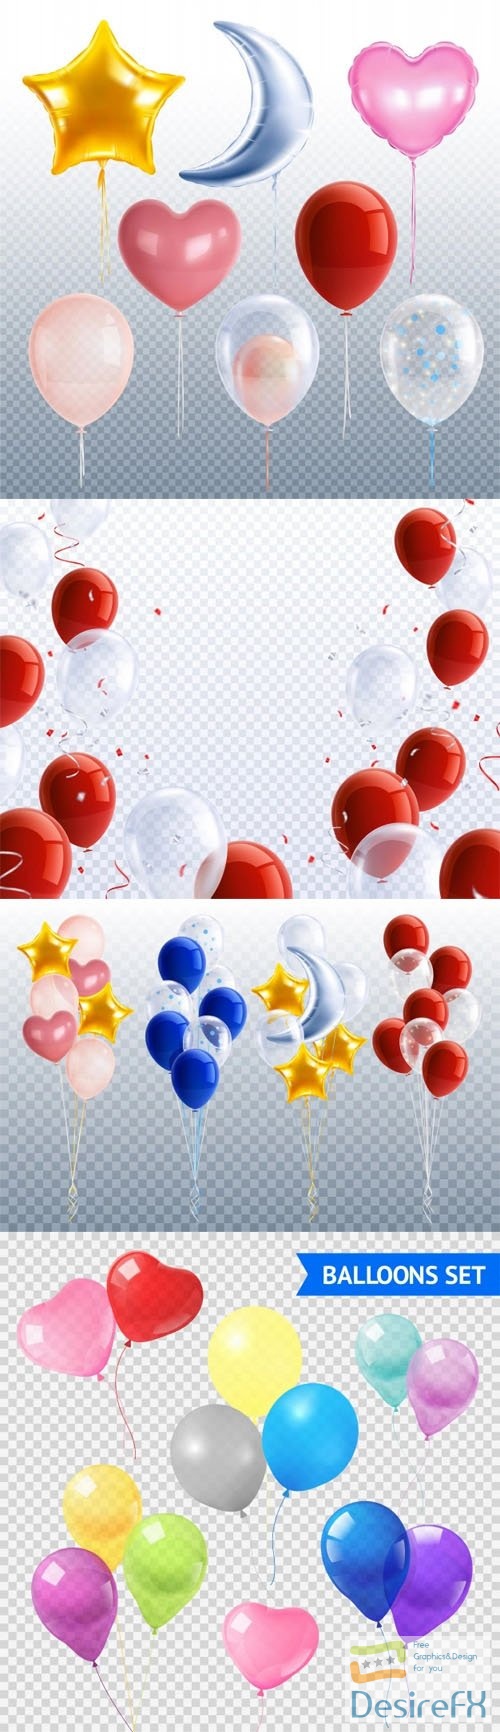 Realistic Anniversary Balloons Vector Templates